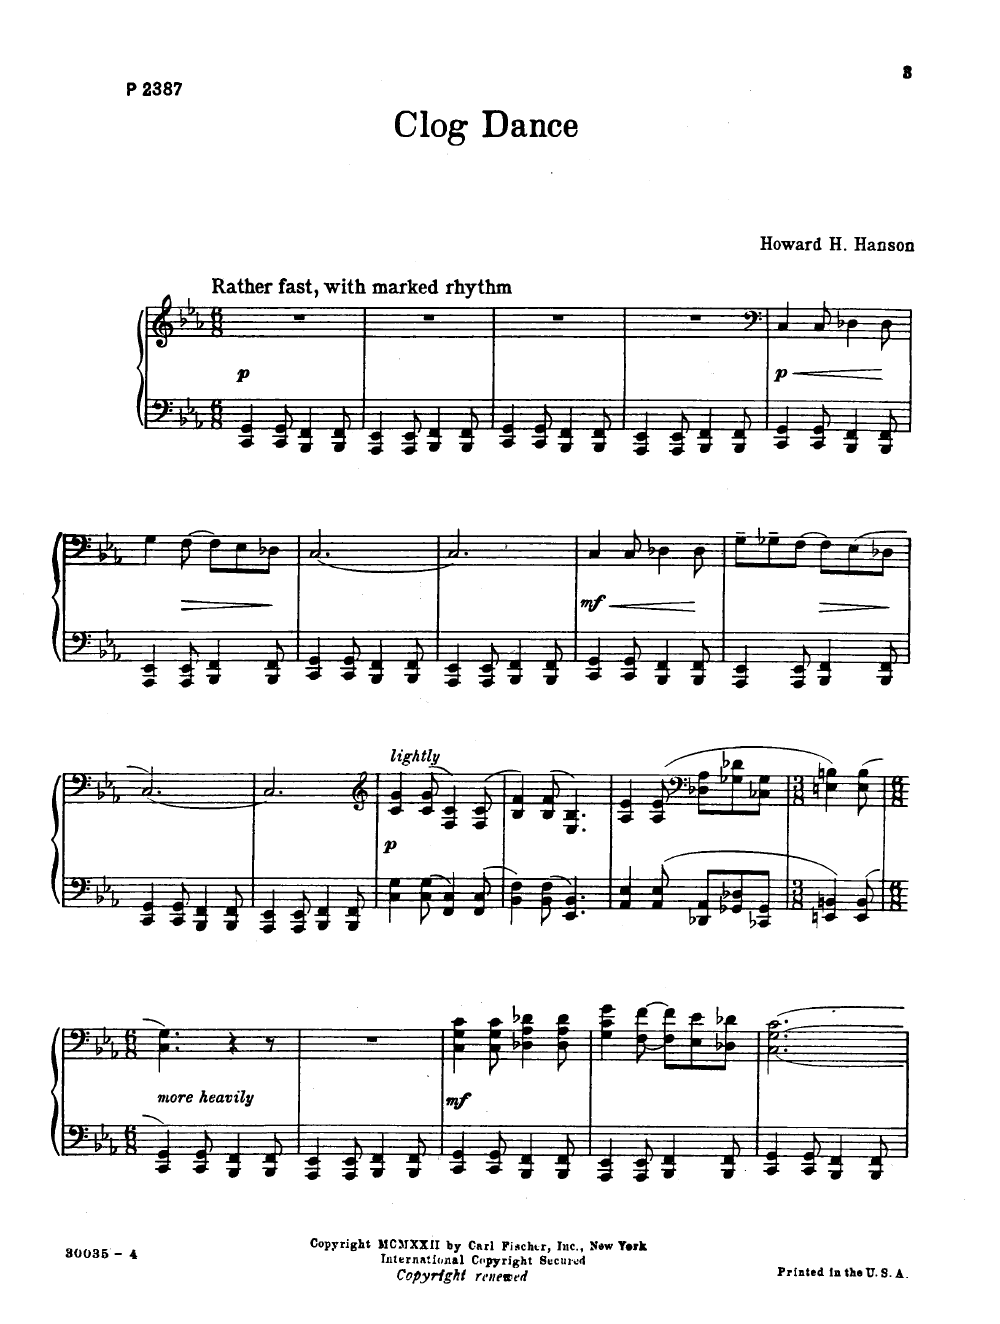 Clog Dance by HANSON| J.W. Pepper Sheet Music